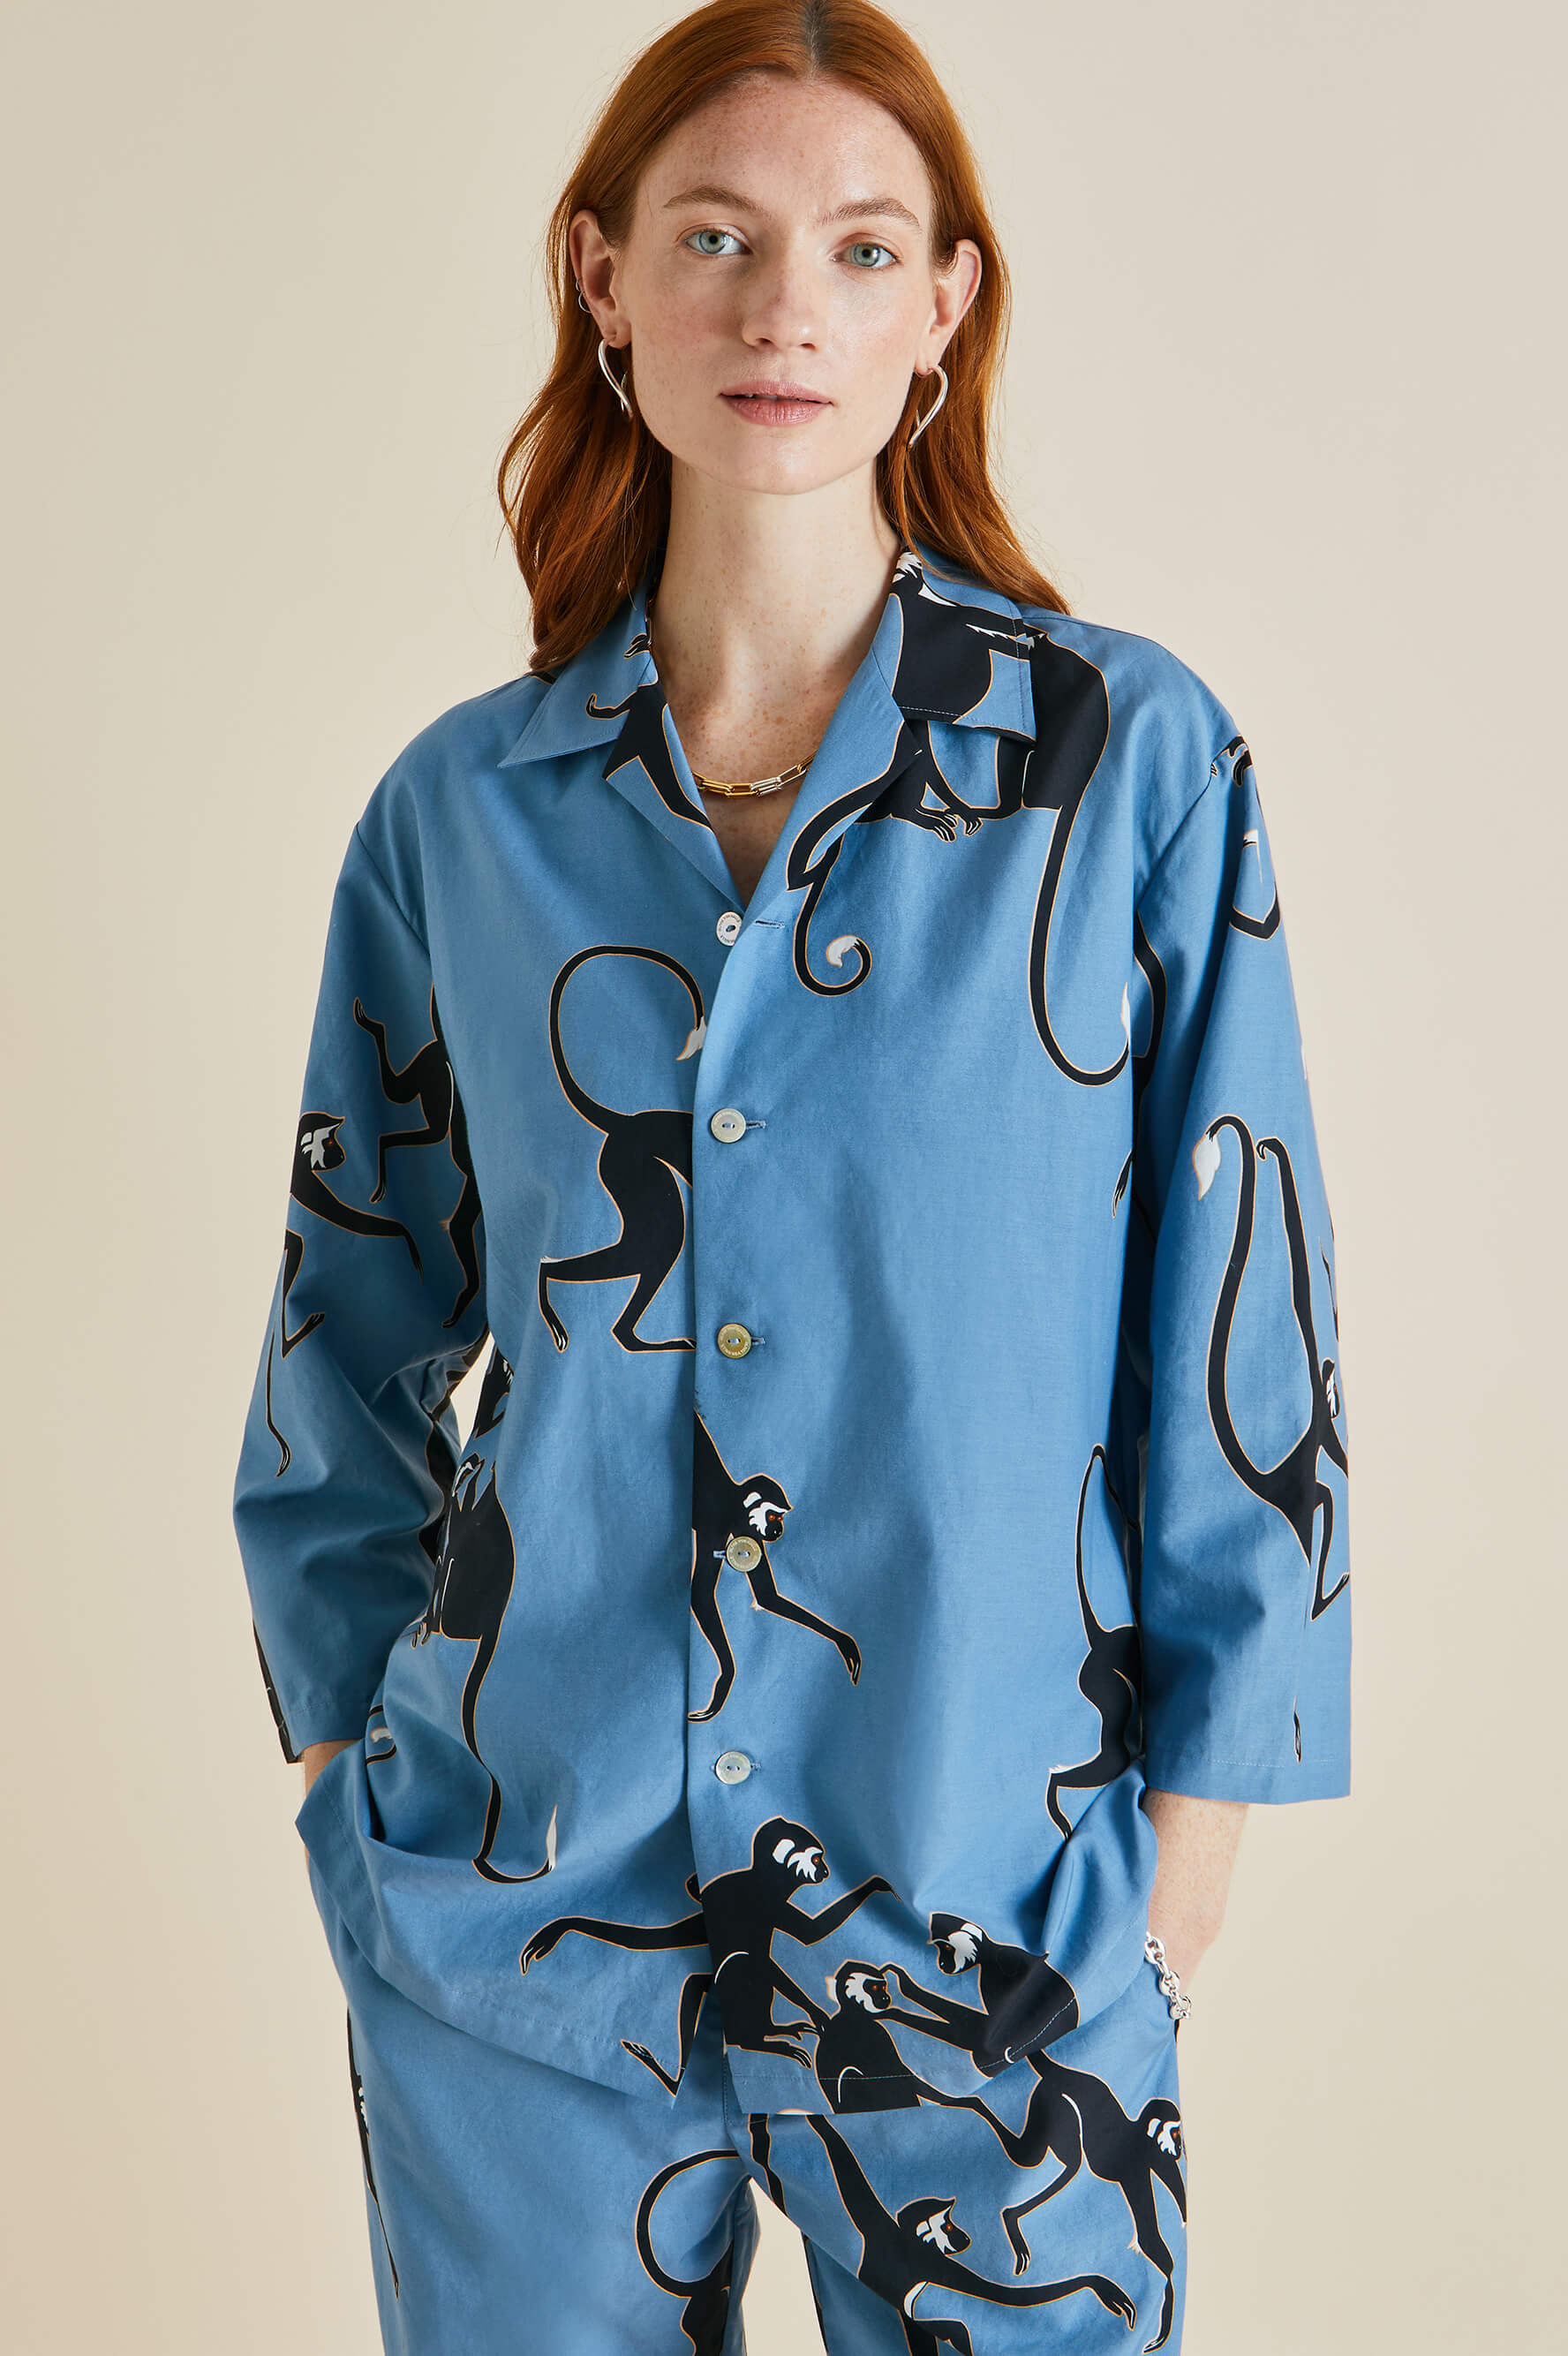 Casablanca Jacamar Blue Monkey Cotton-Silk Pajamas